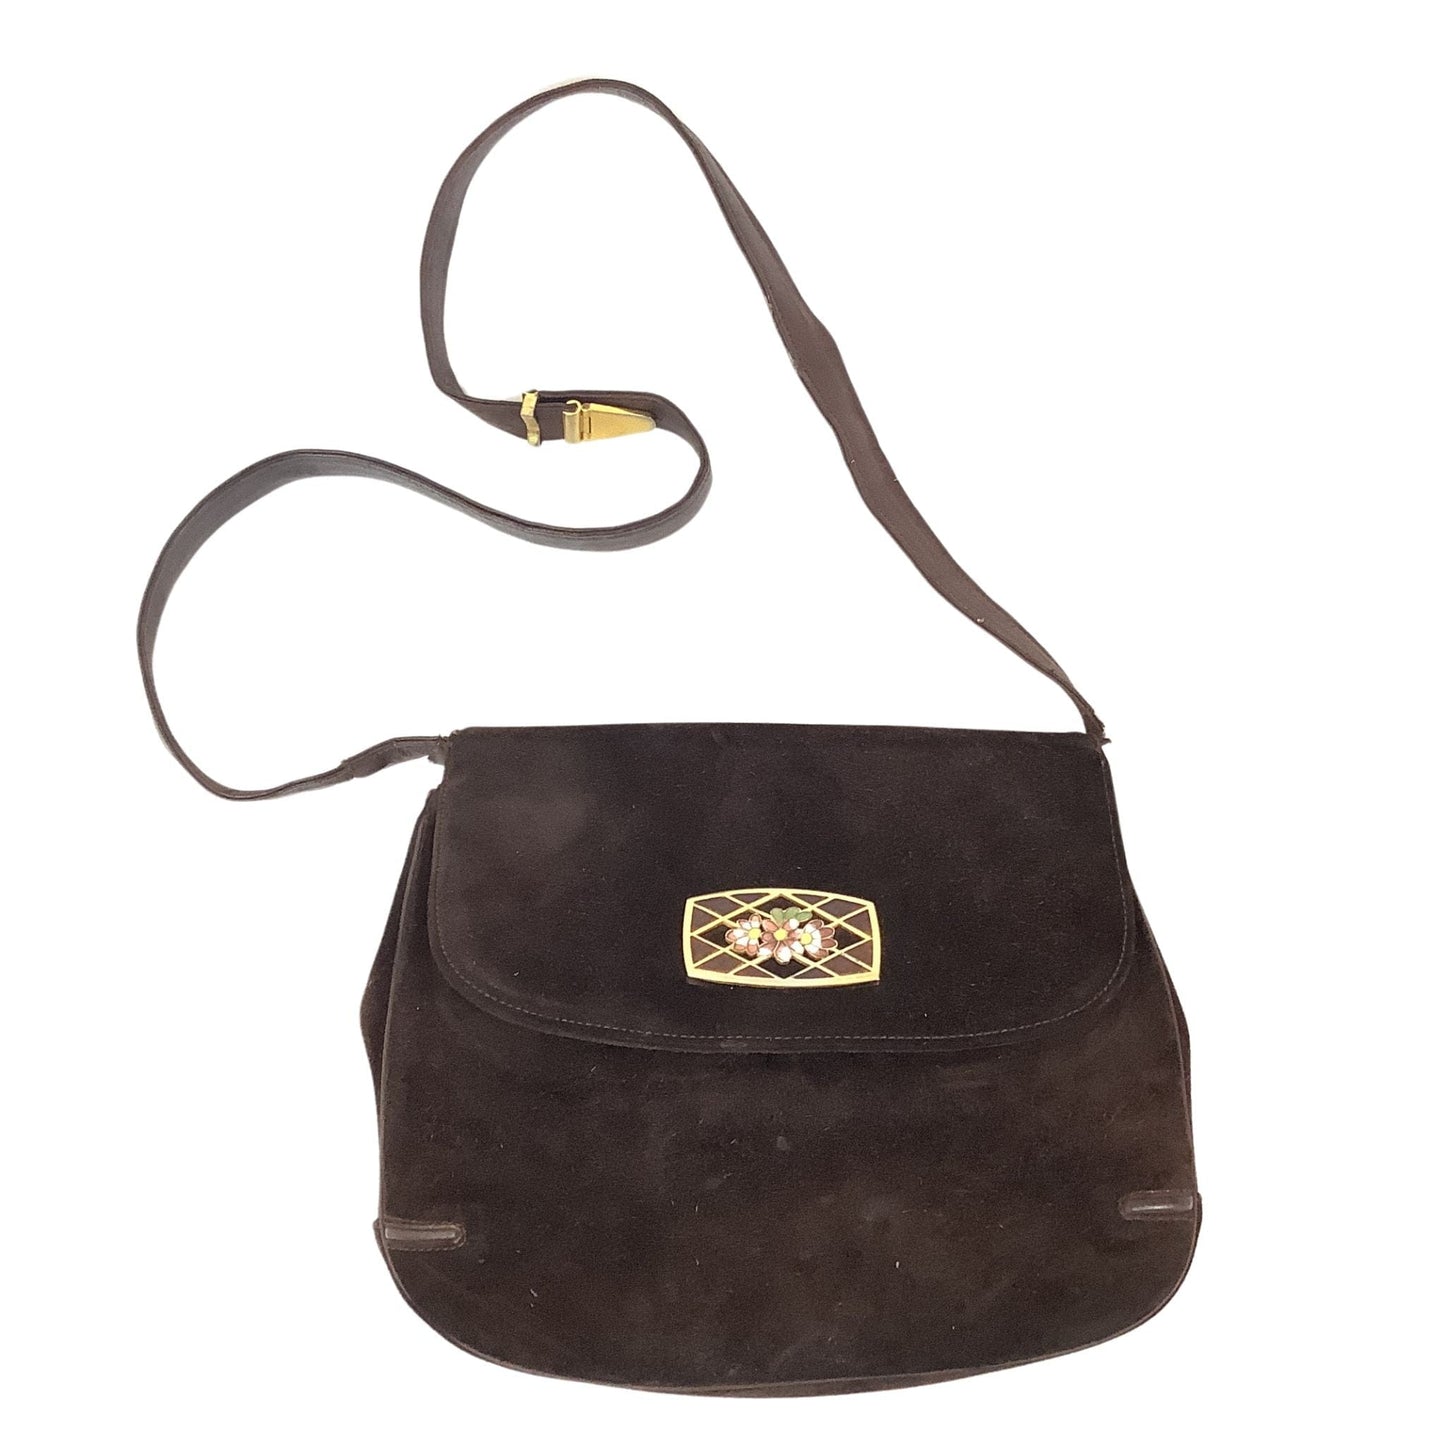 Neiman Marcus Handbag Brown / Leather / Classic